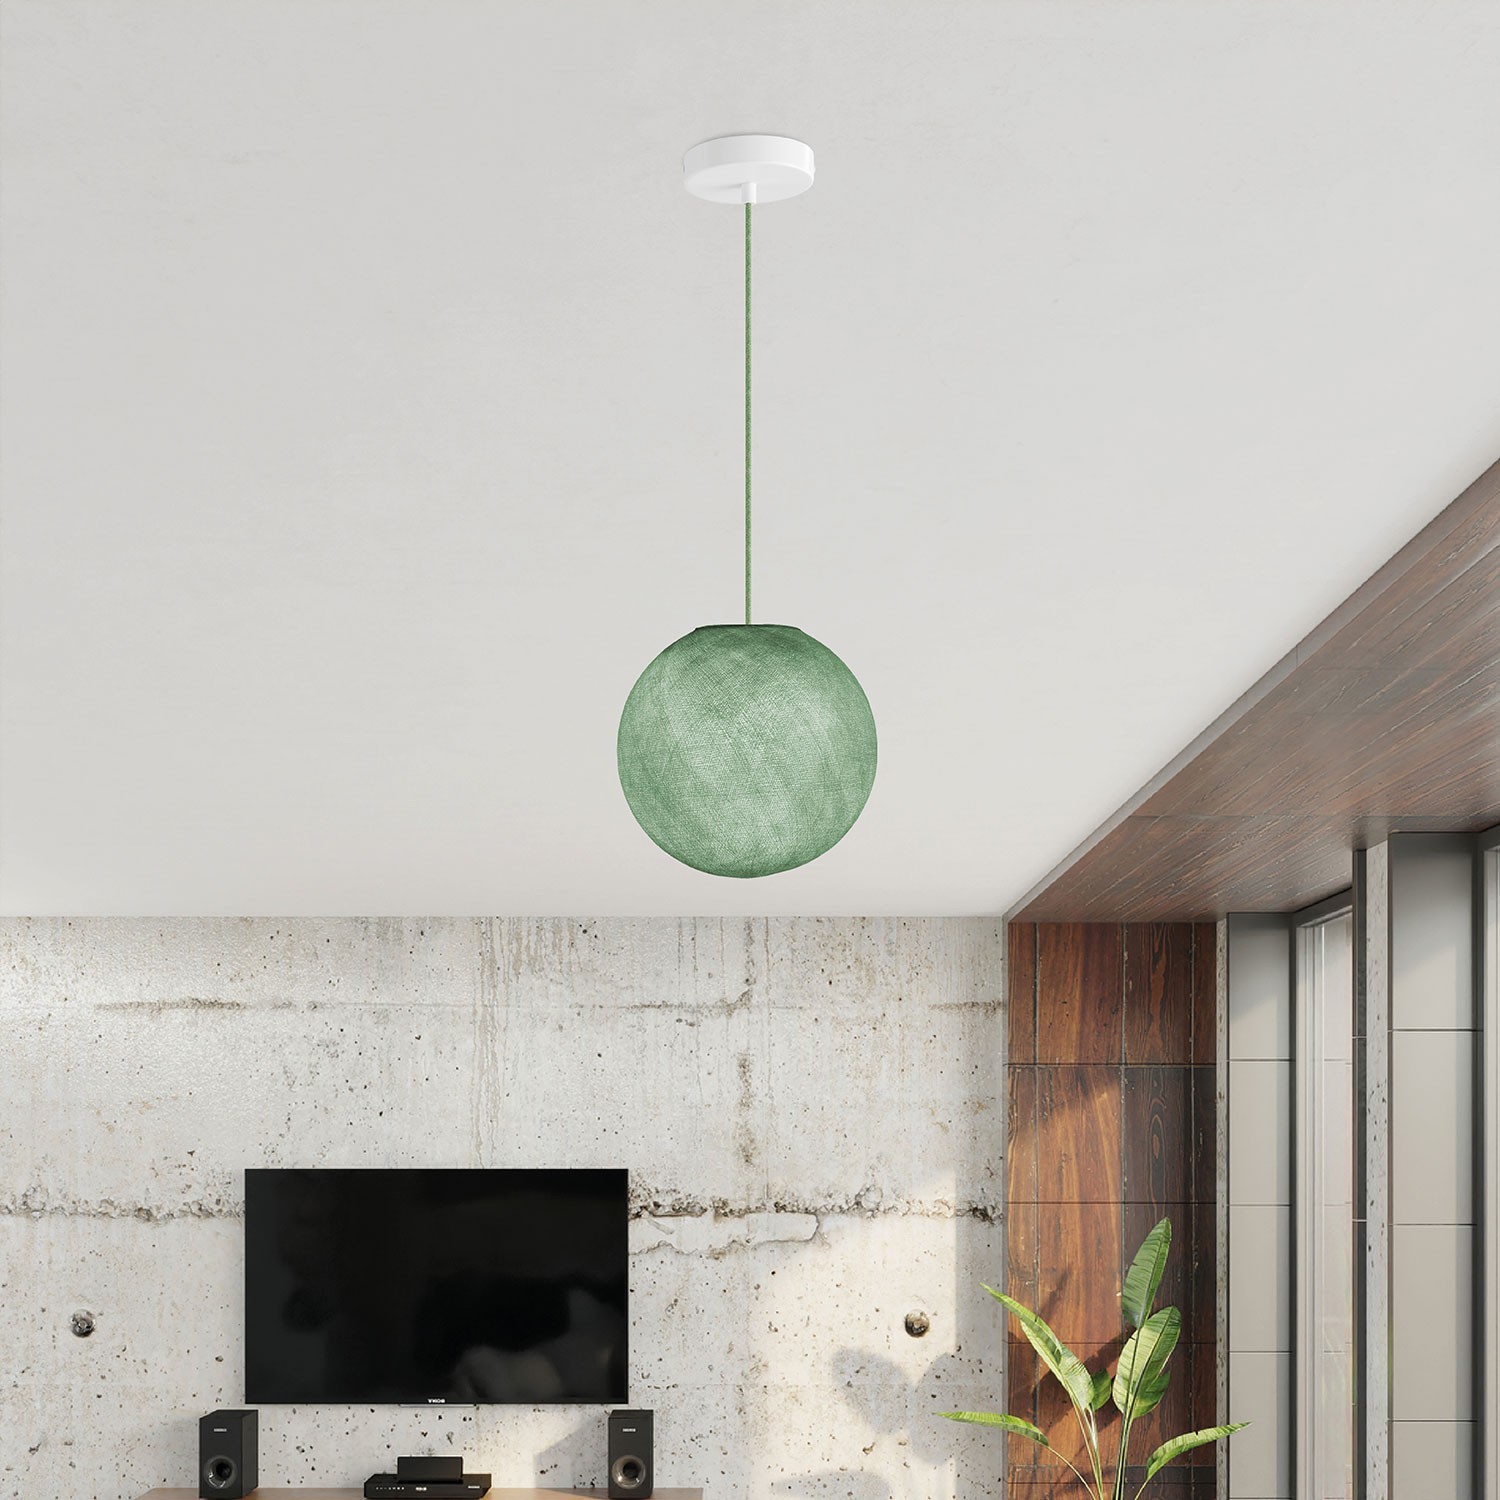 Sphere Lampshade in fiber - 100% handmade